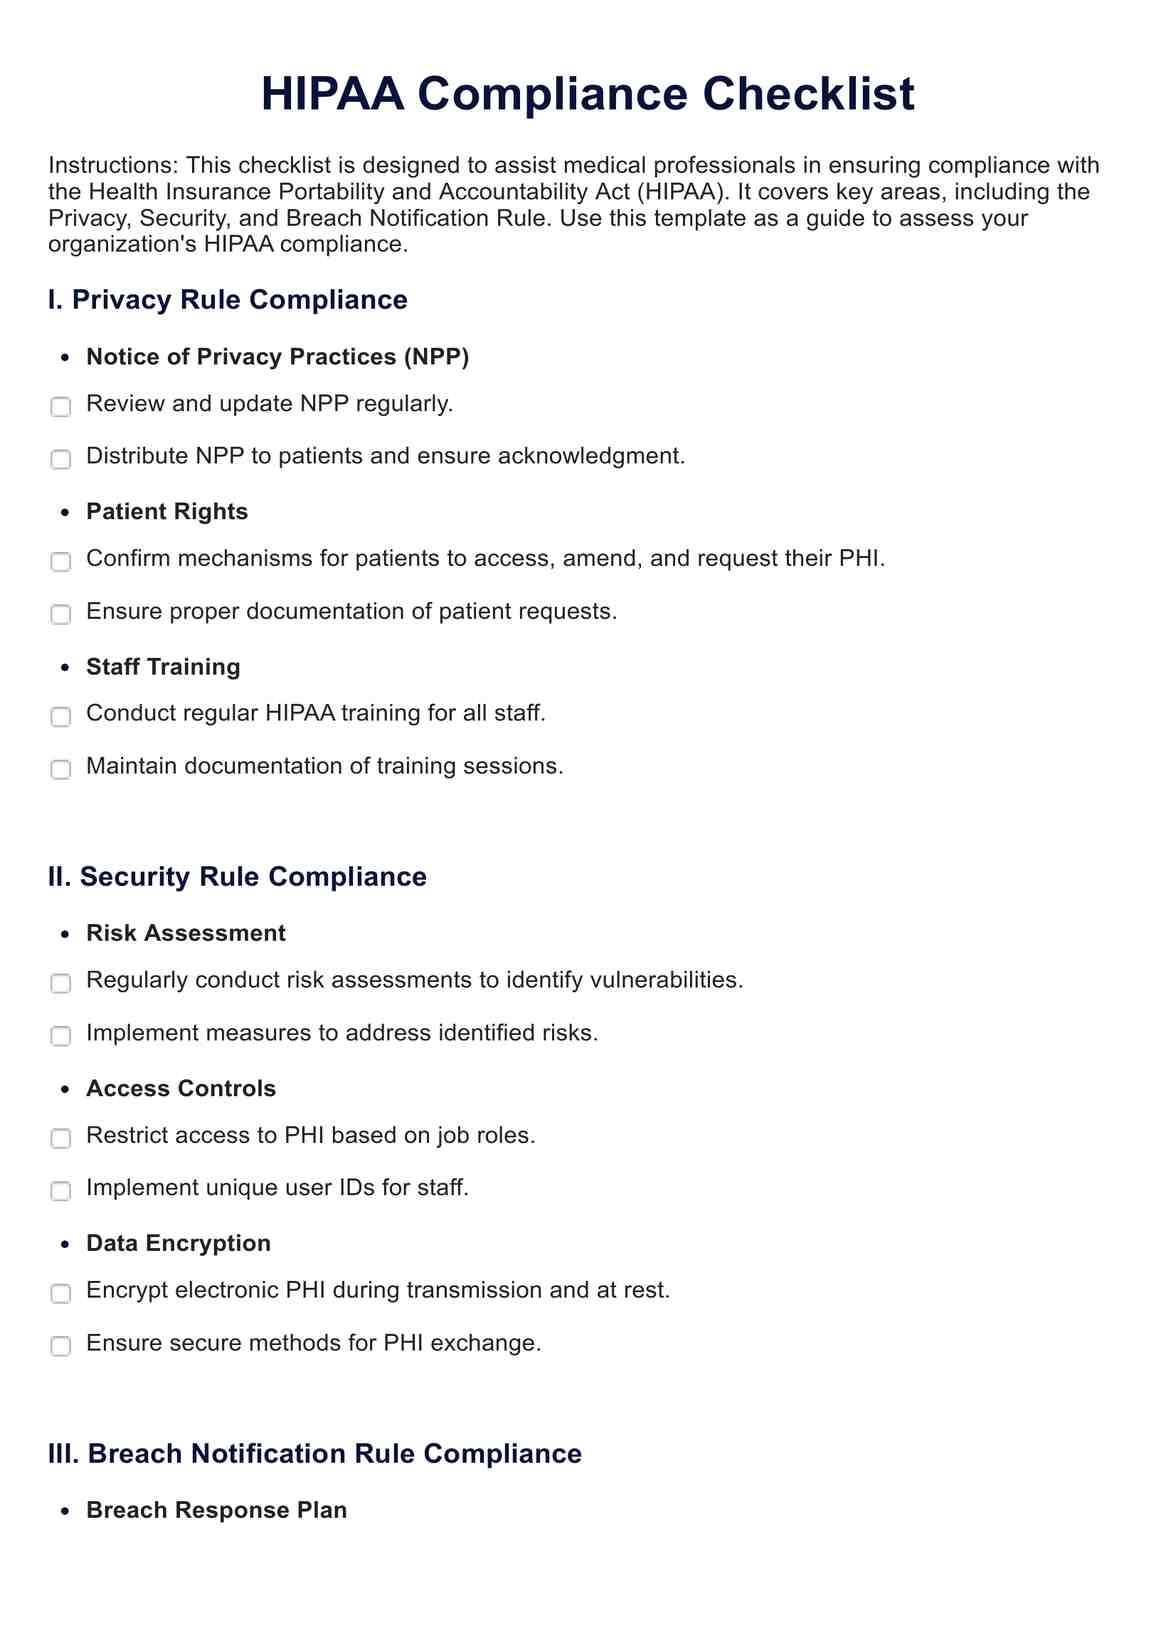 HIPAA PDF Example